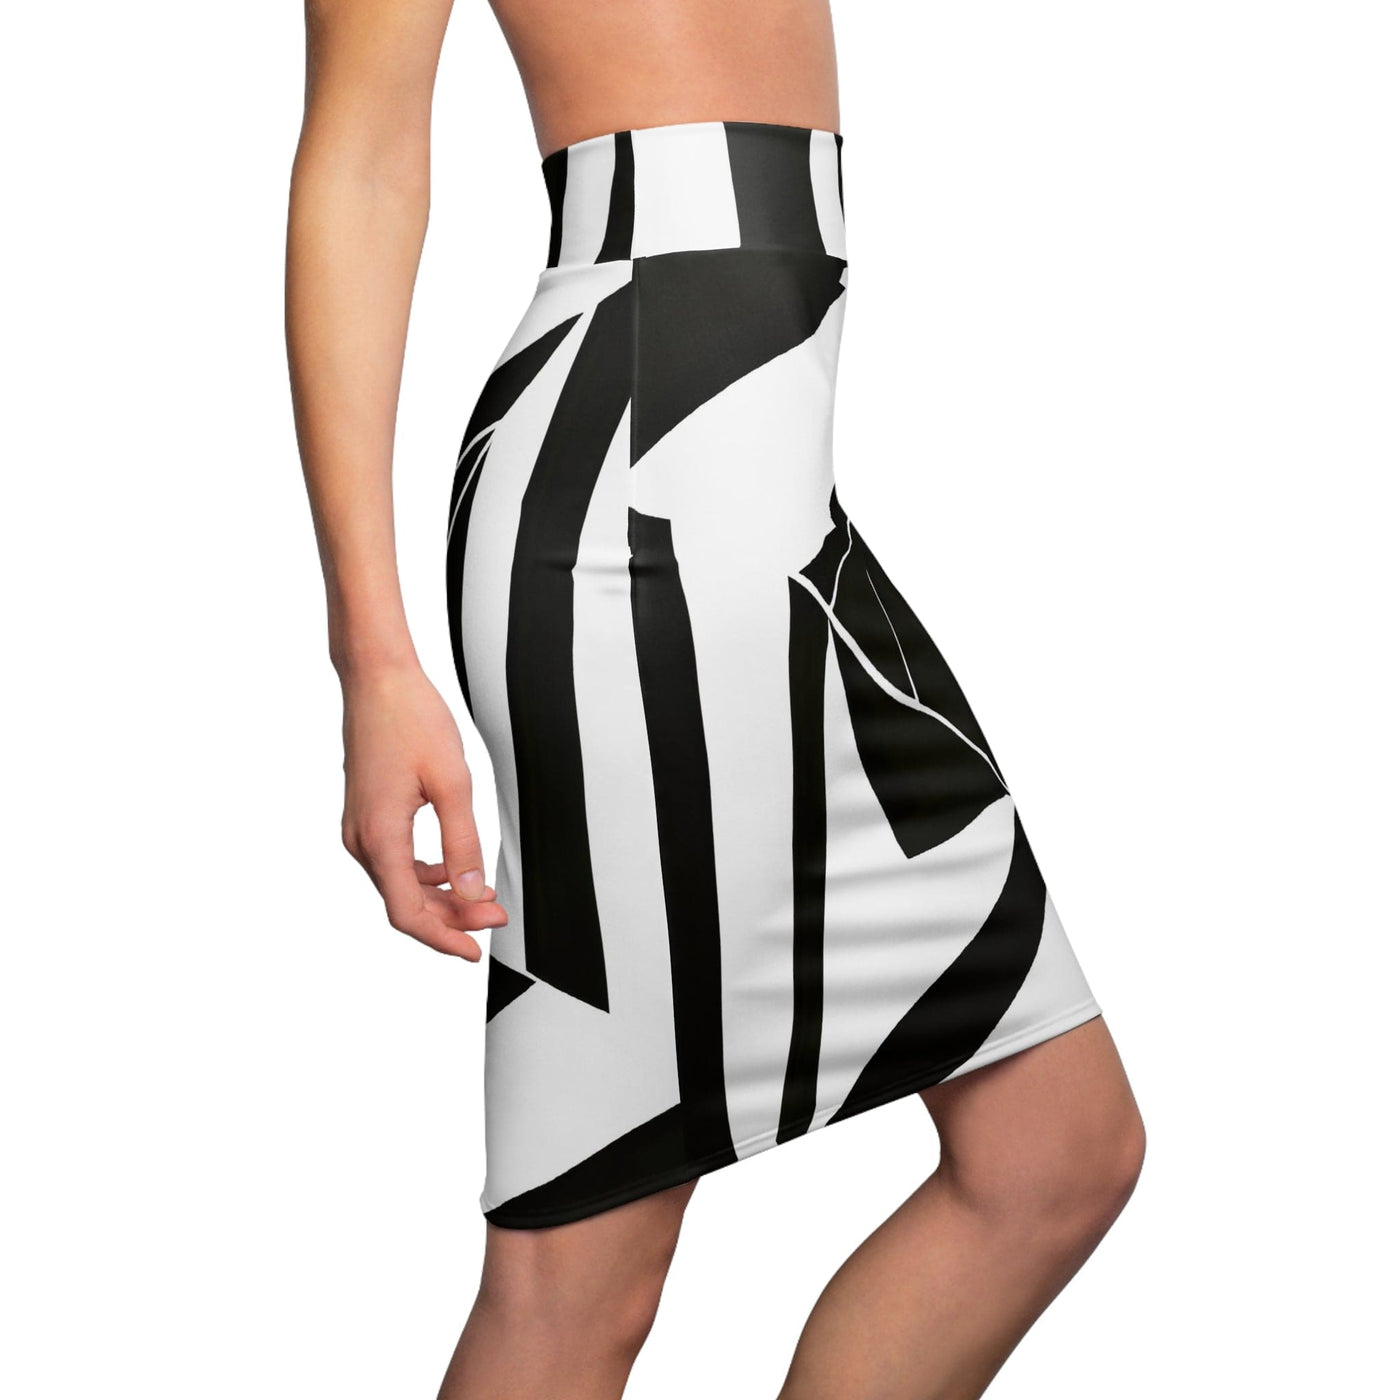 High Waist Womens Pencil Skirt - Contour Stretch - Black And White Geometric